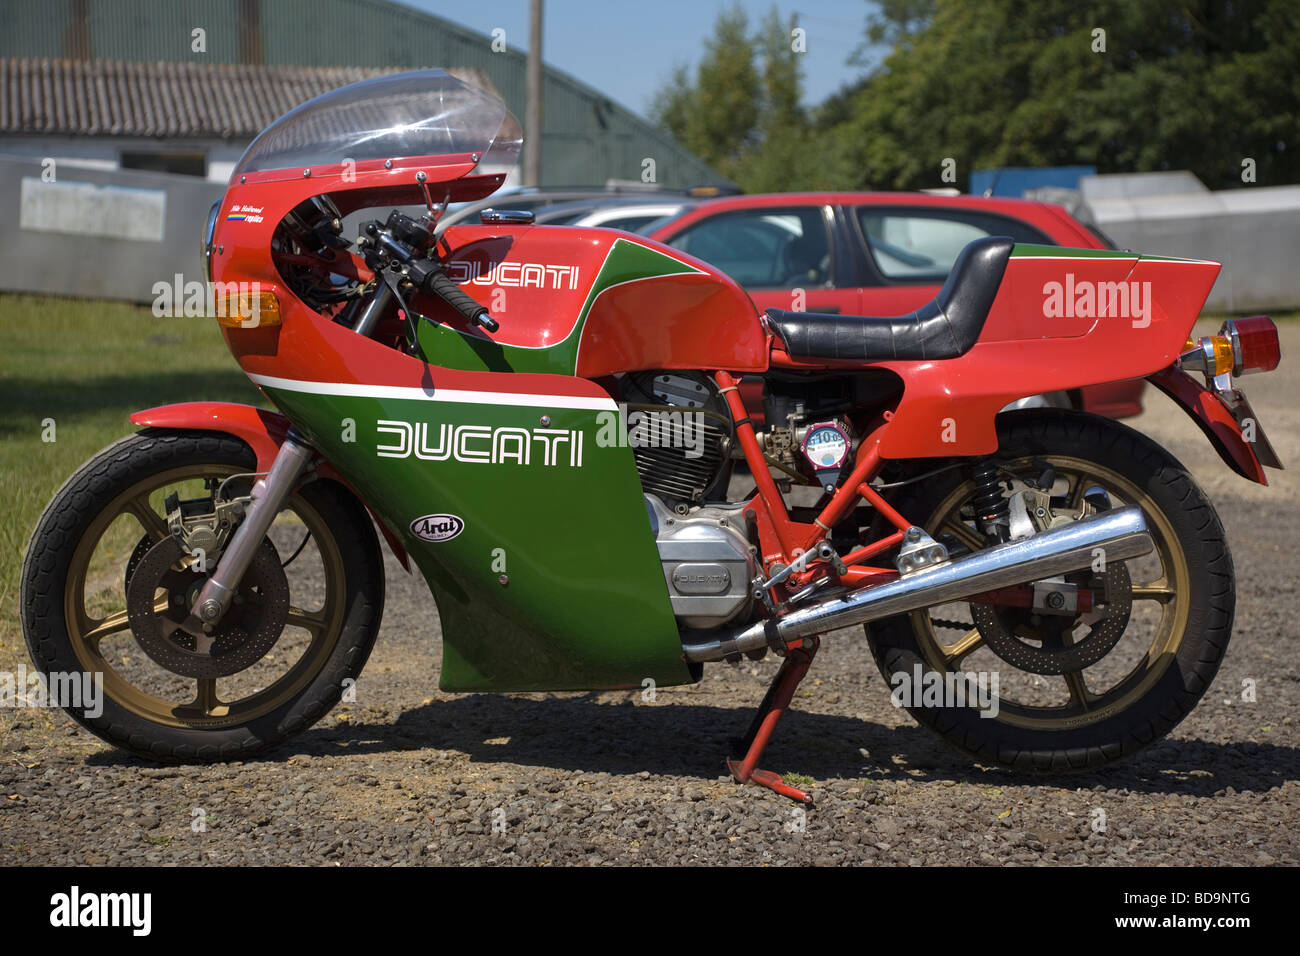 Mike Hailwood Replica moto Ducati Foto Stock